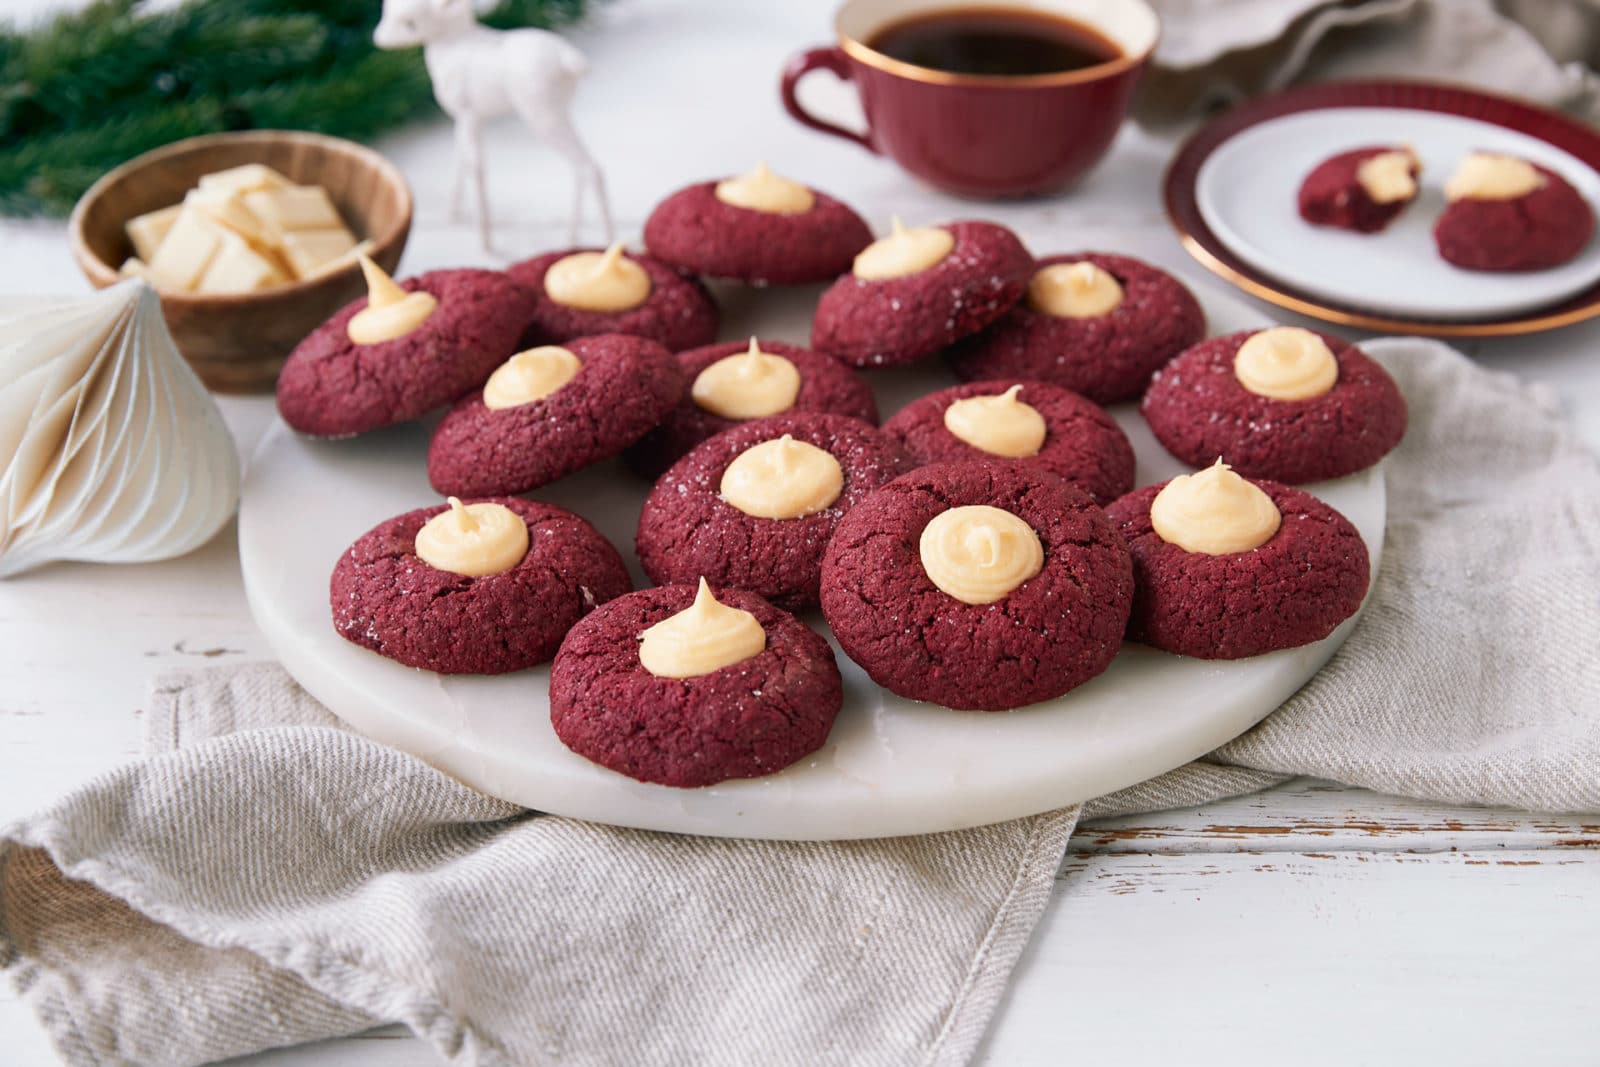 Red velvet cookies